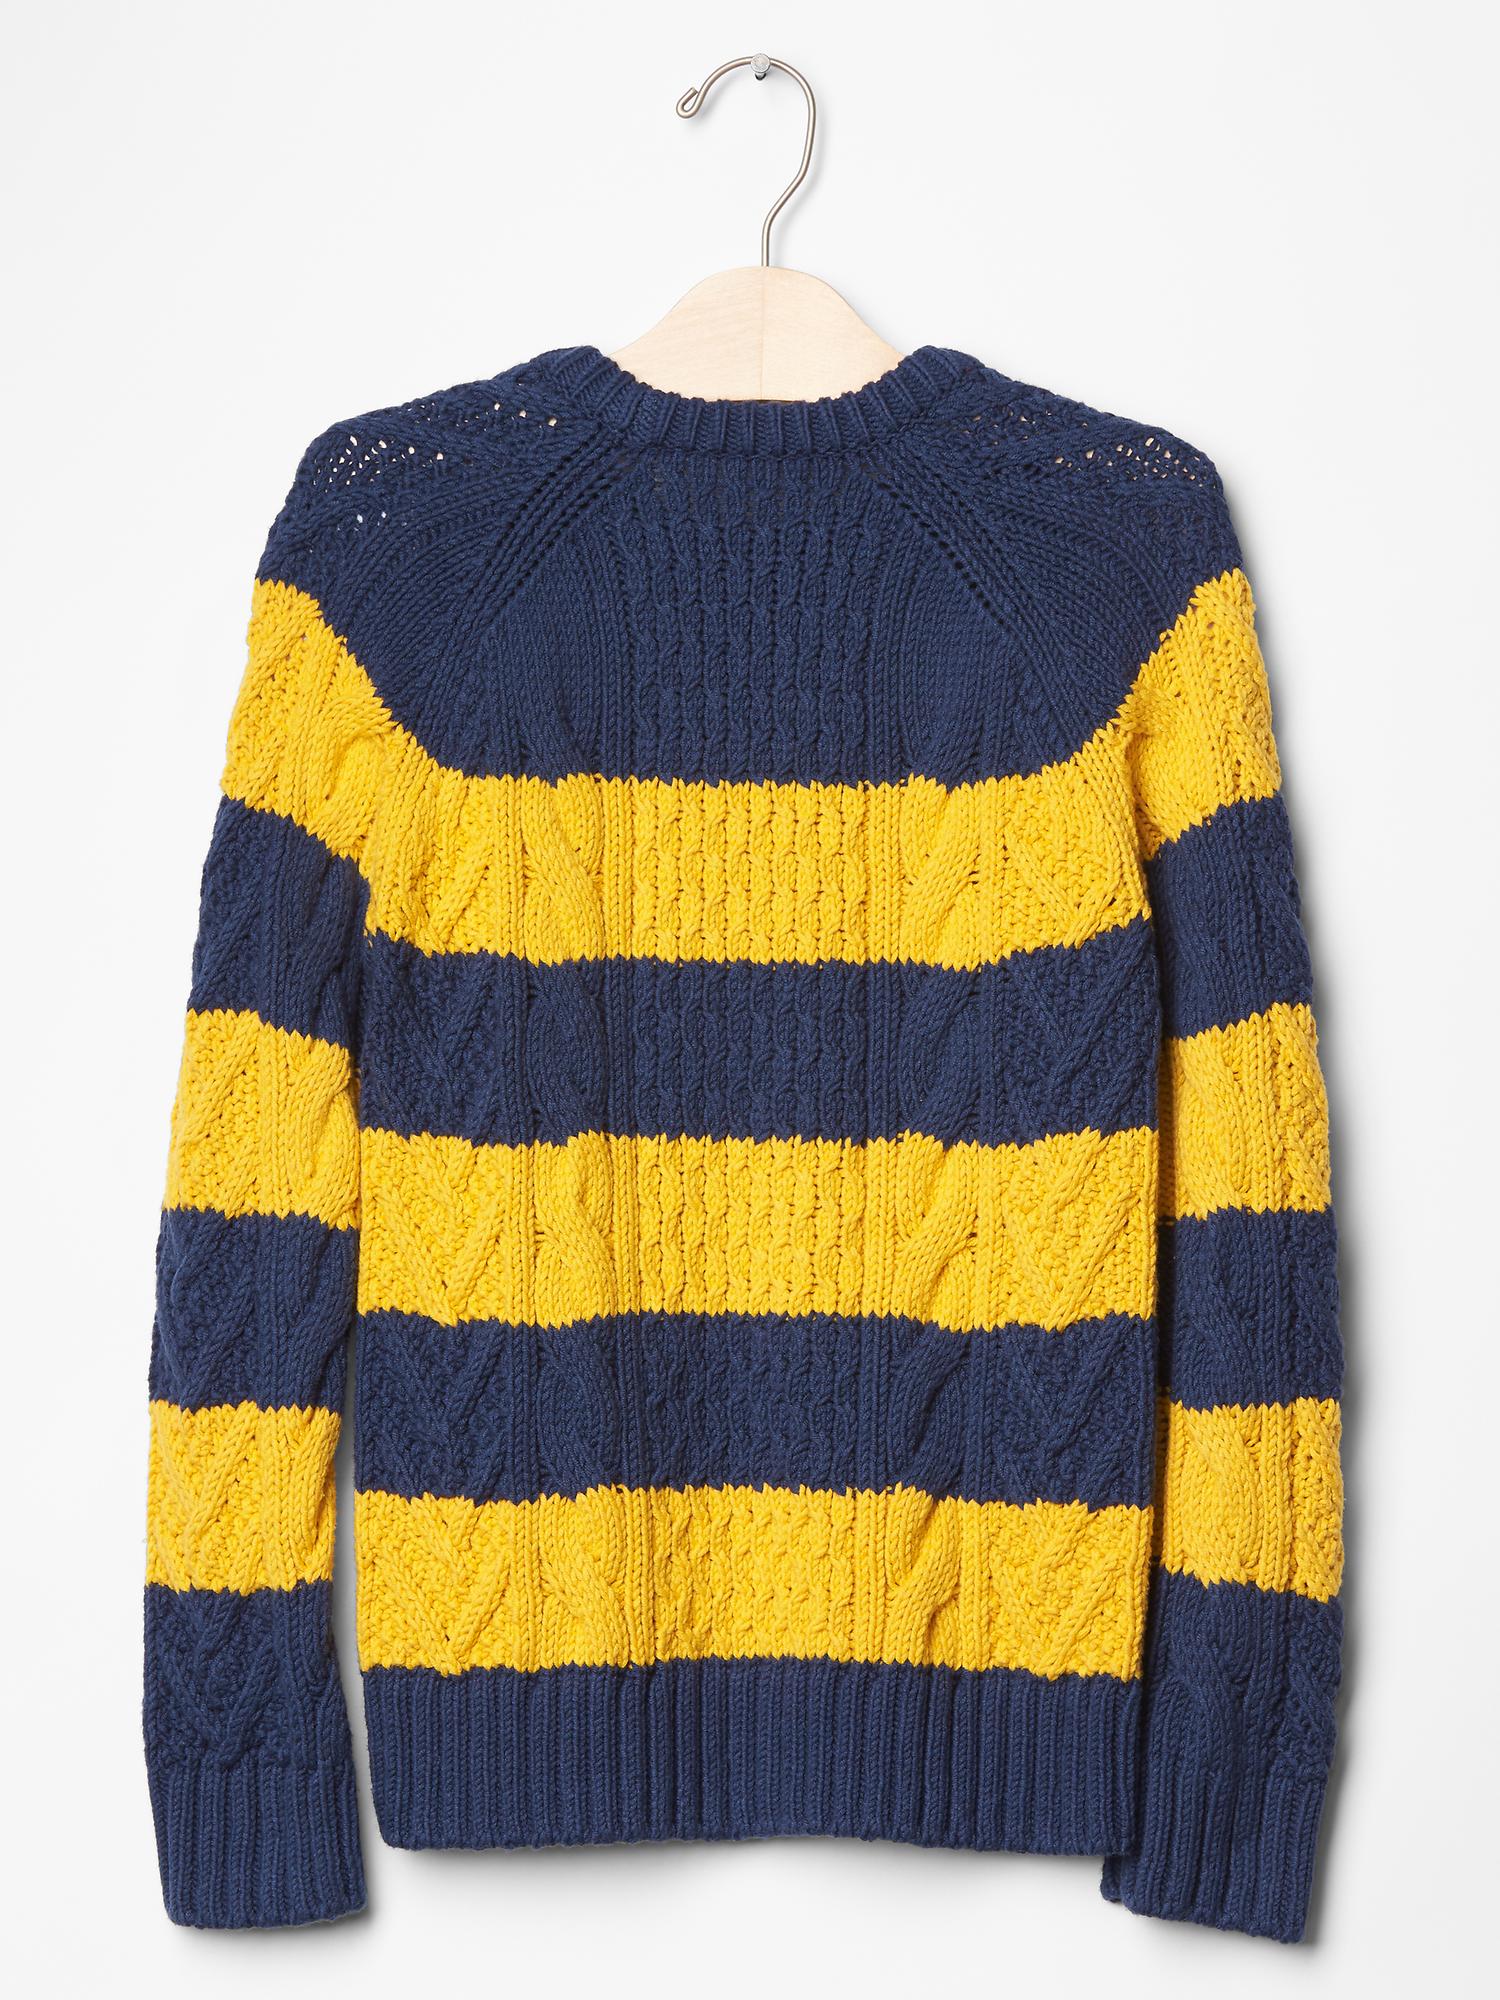 Stripe cable sweater | Gap